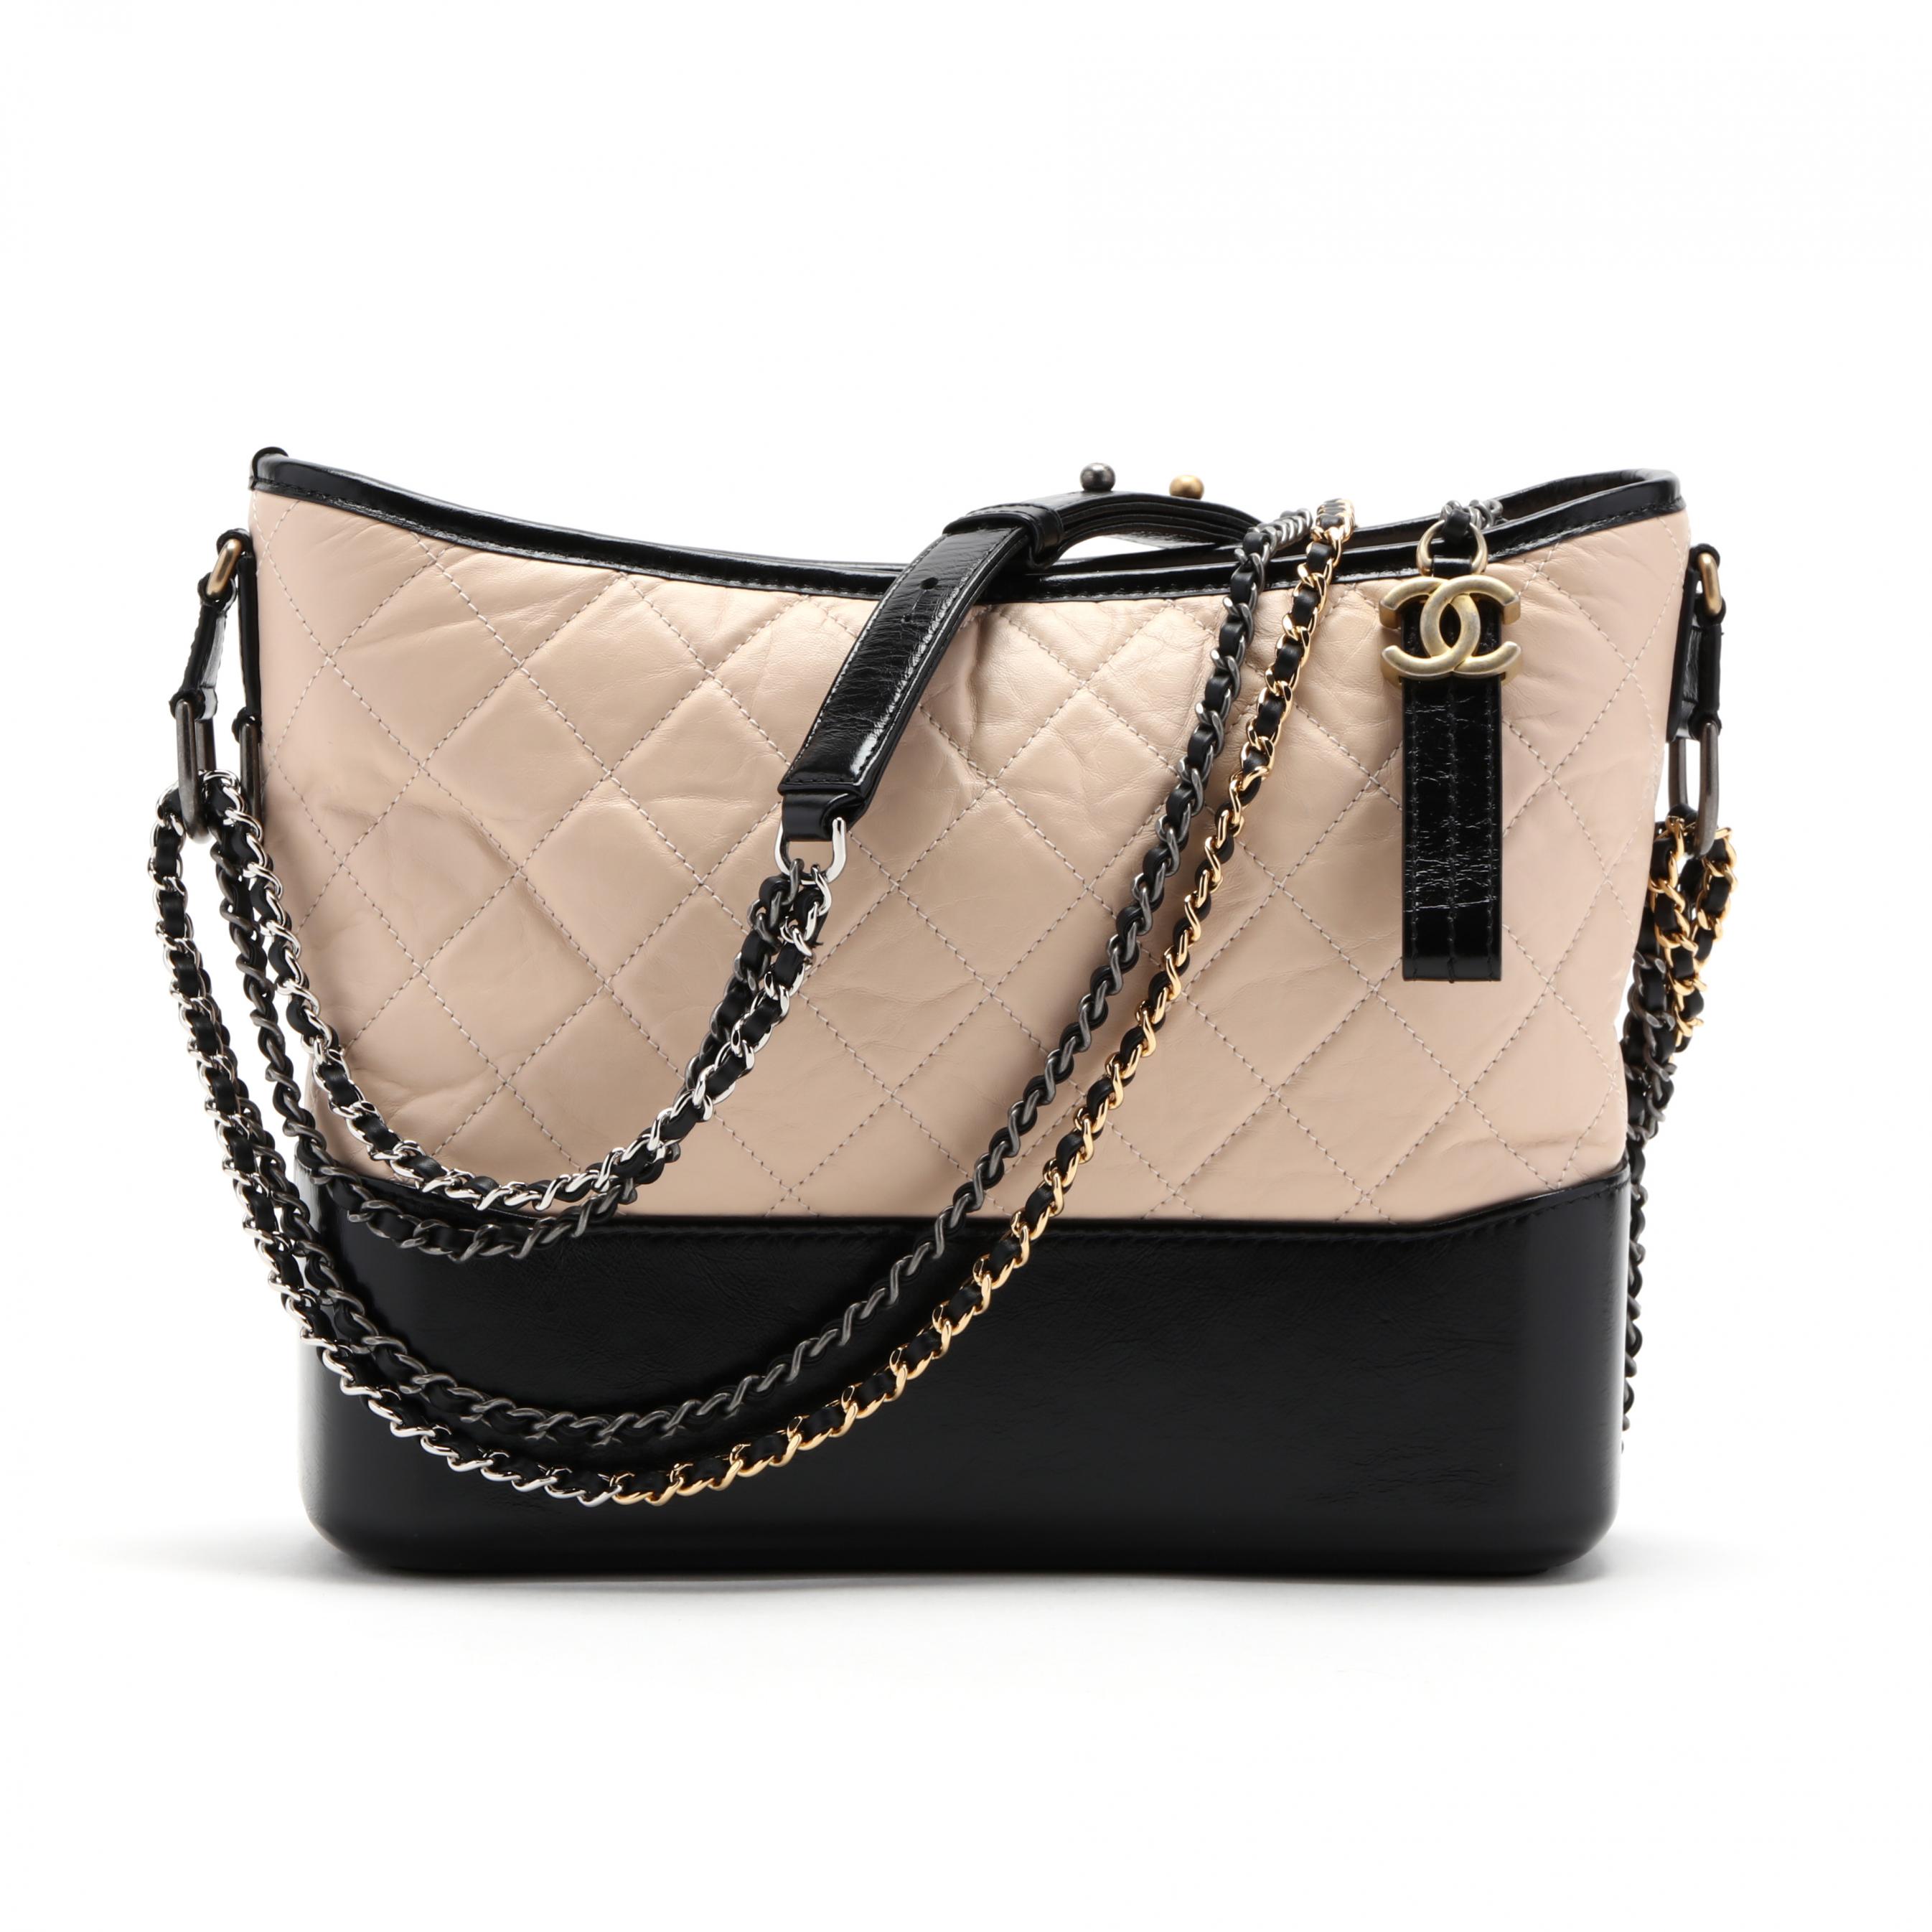 Past auction: Black lambskin Medium Classic Flap bag, Chanel